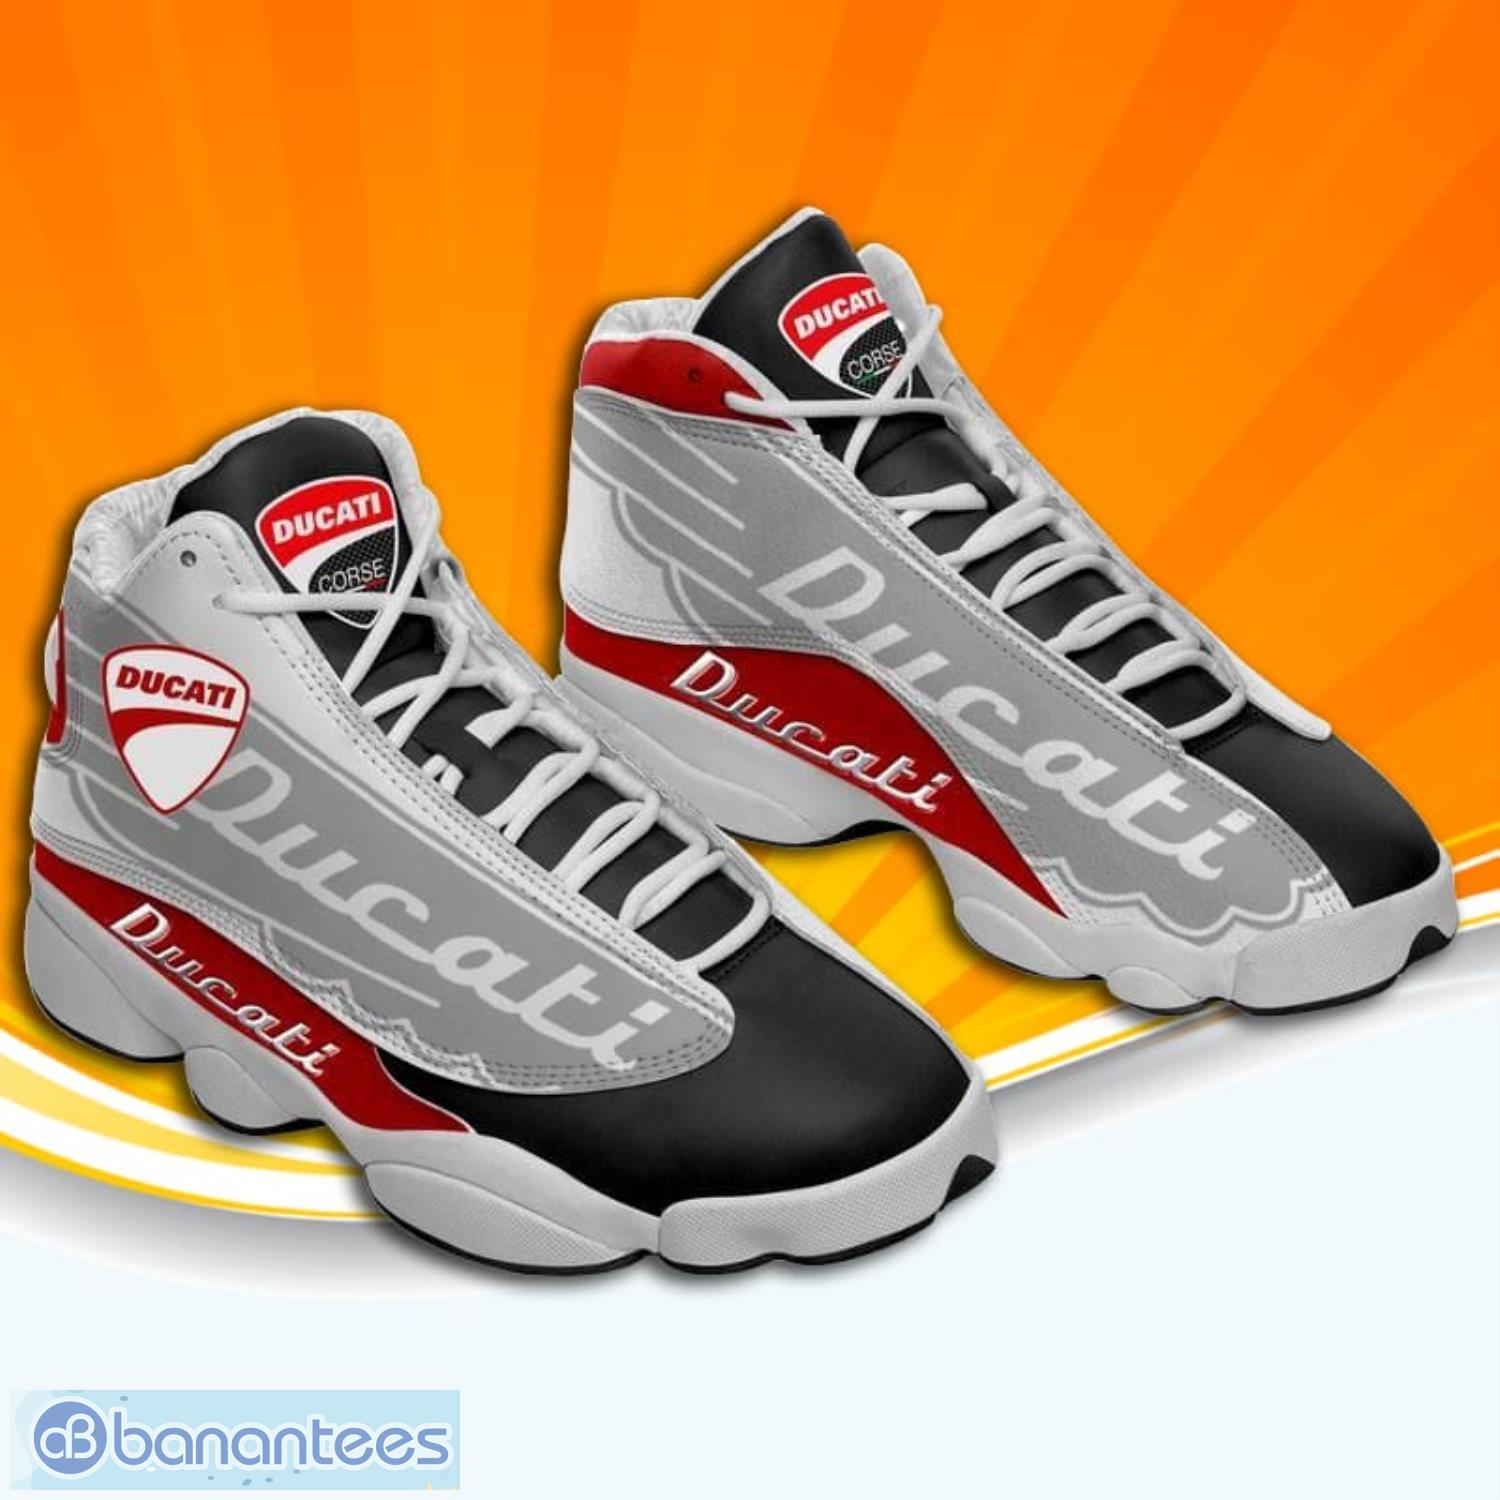 Ducati Sport Shoes Air Jordan 13 Sneaker Shoes Product Photo 3